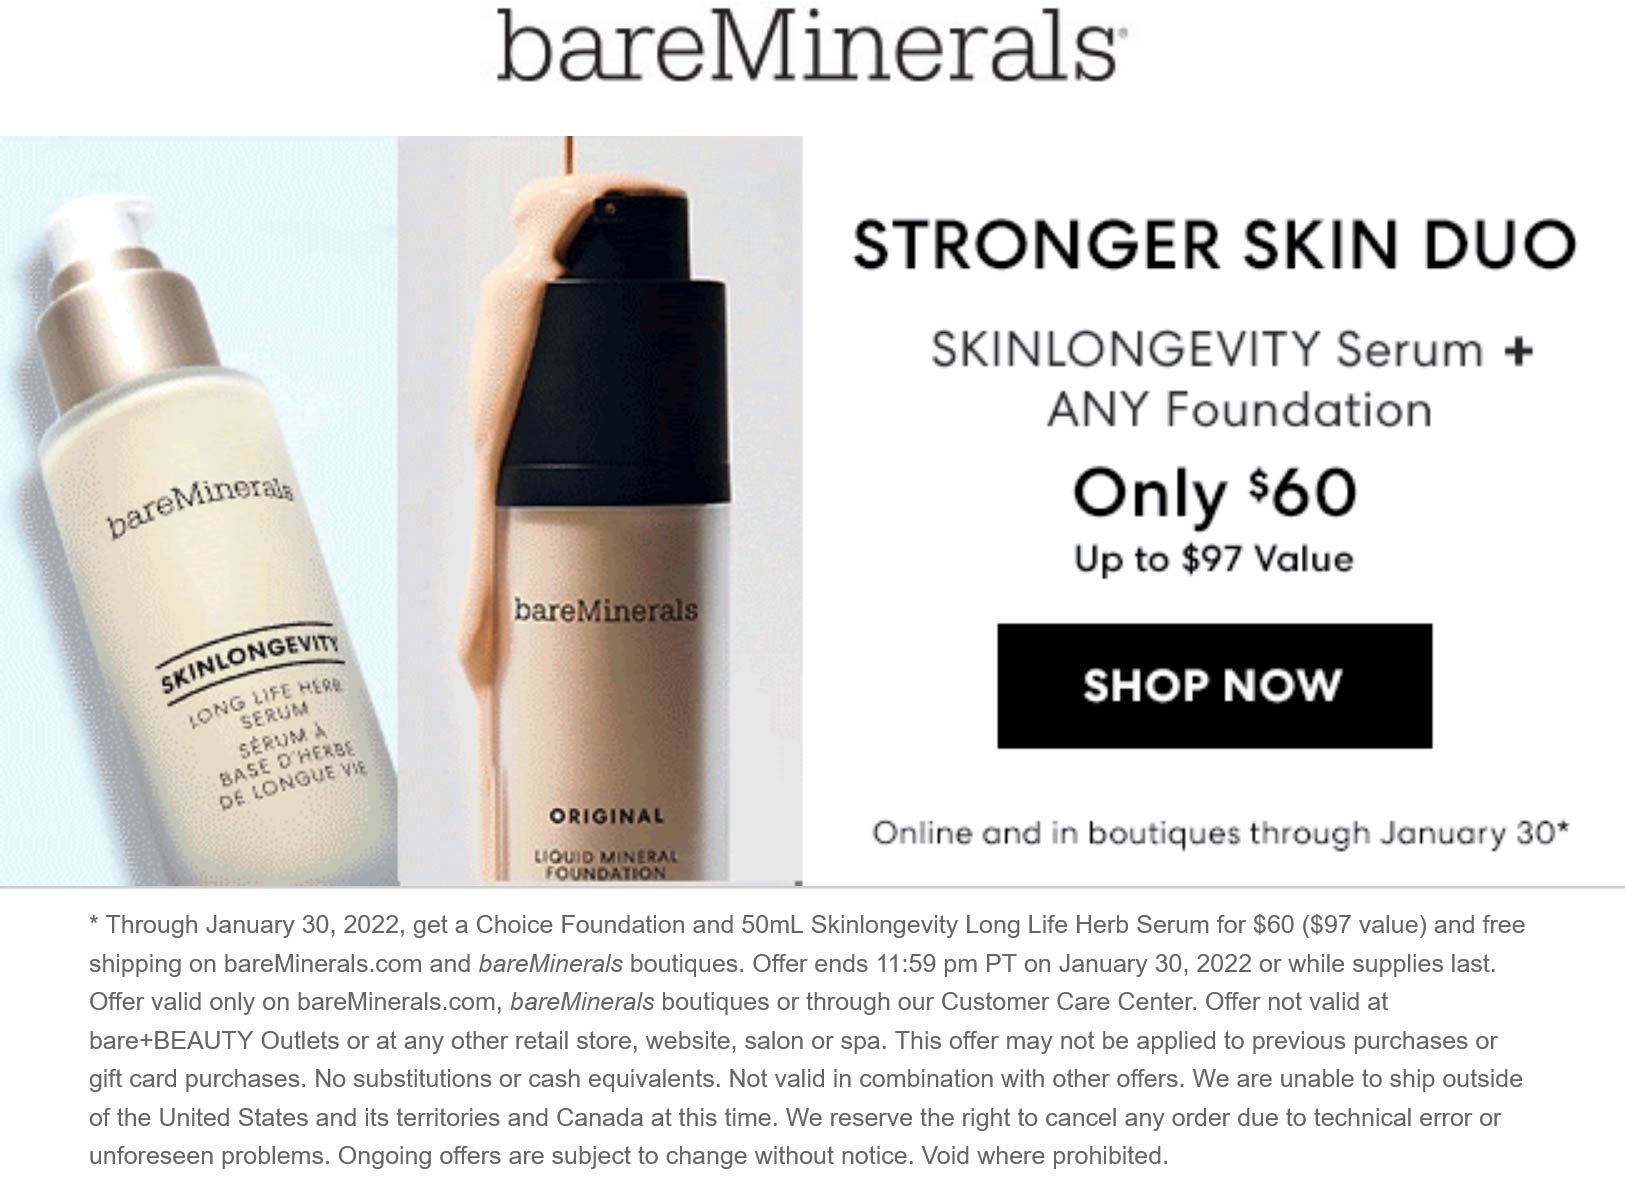 bareMinerals stores Coupon  Any foundation + skinlongevity serum = $60 at bareMinerals, ditto online #bareminerals 